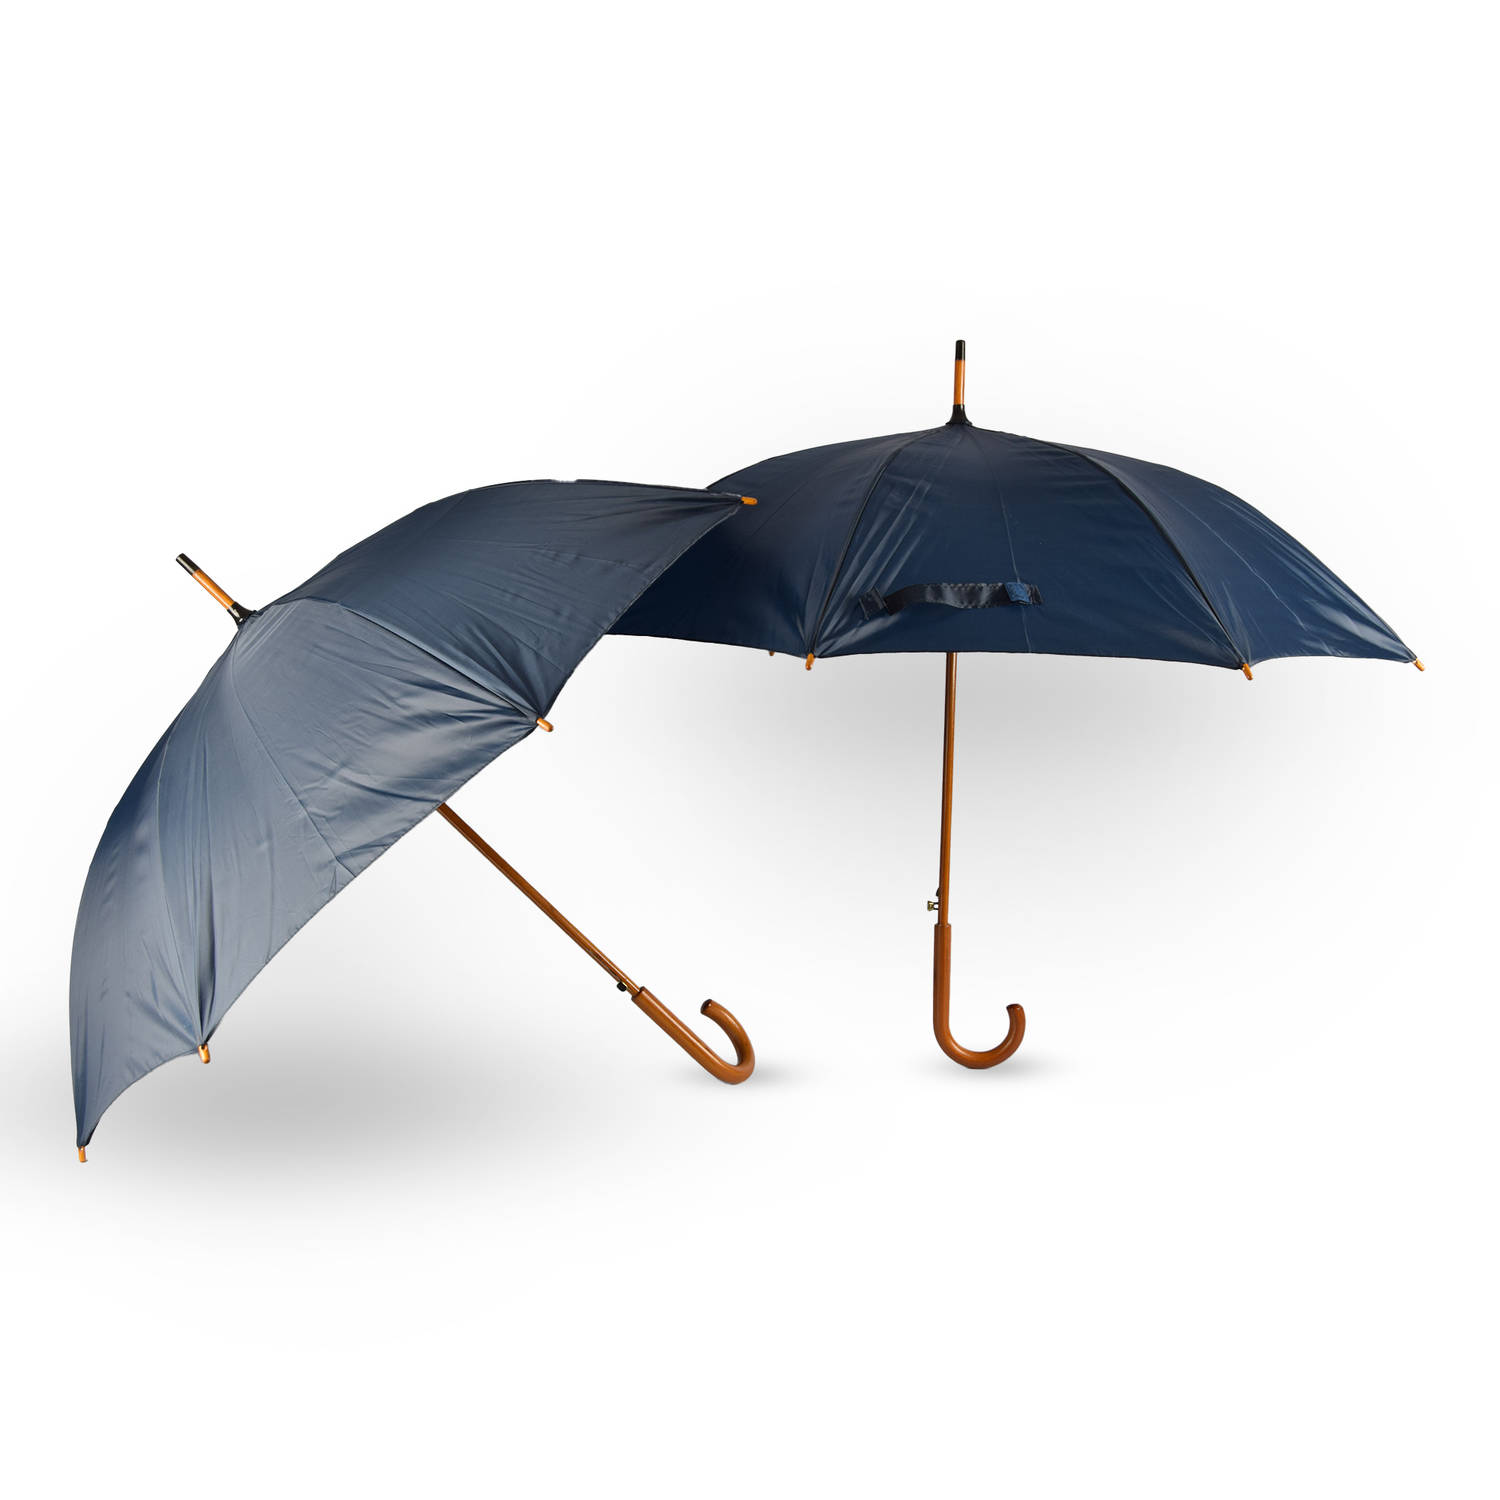 2x Paraplu Automatische paraplu Navy blauw Opvouwbare paraplu Houten handvat 89cm*98cm